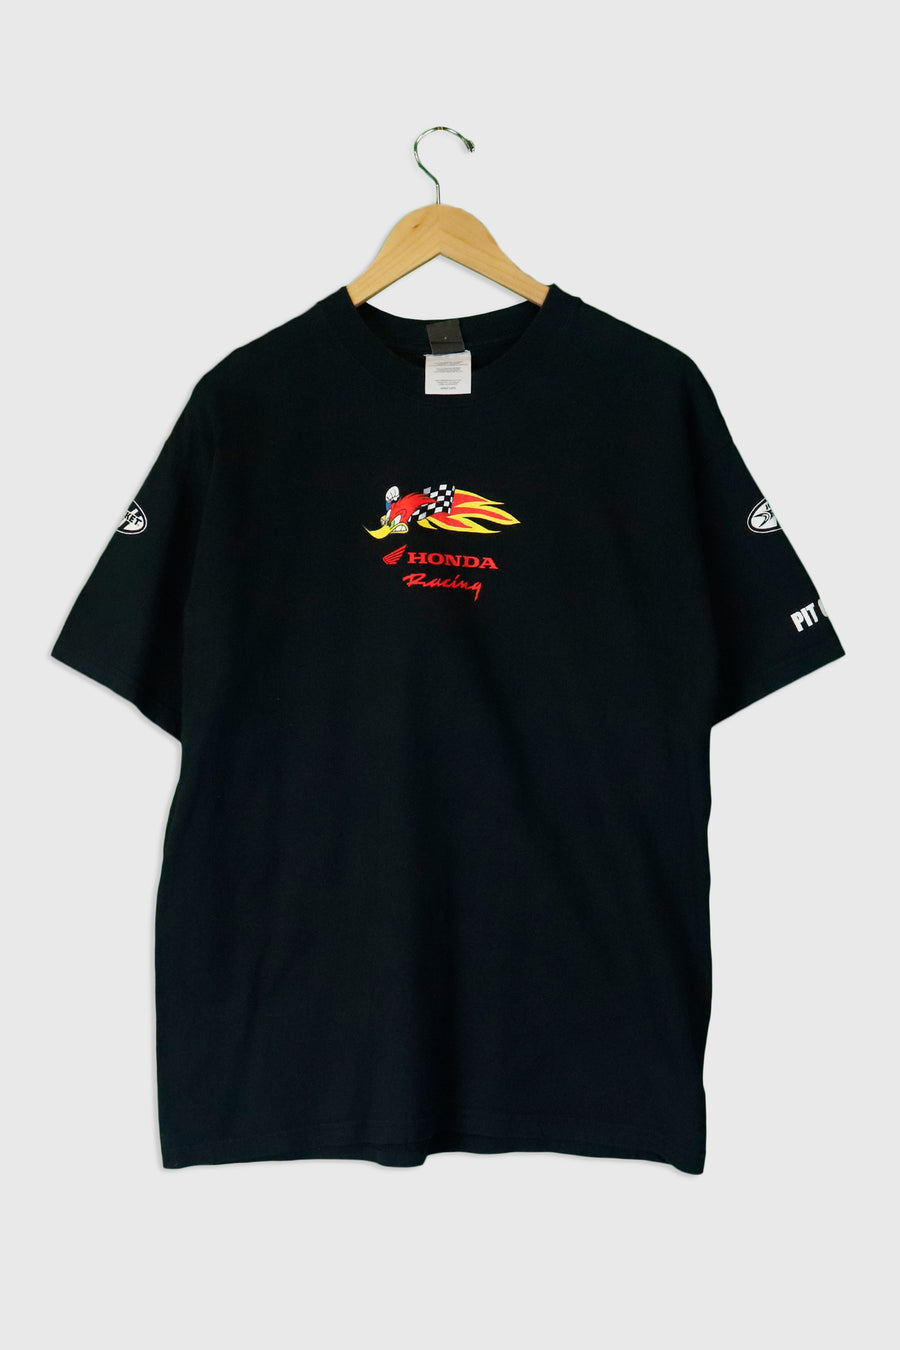 Vintage Road Runner Honda Racing Vinyl T Shirt Sz L